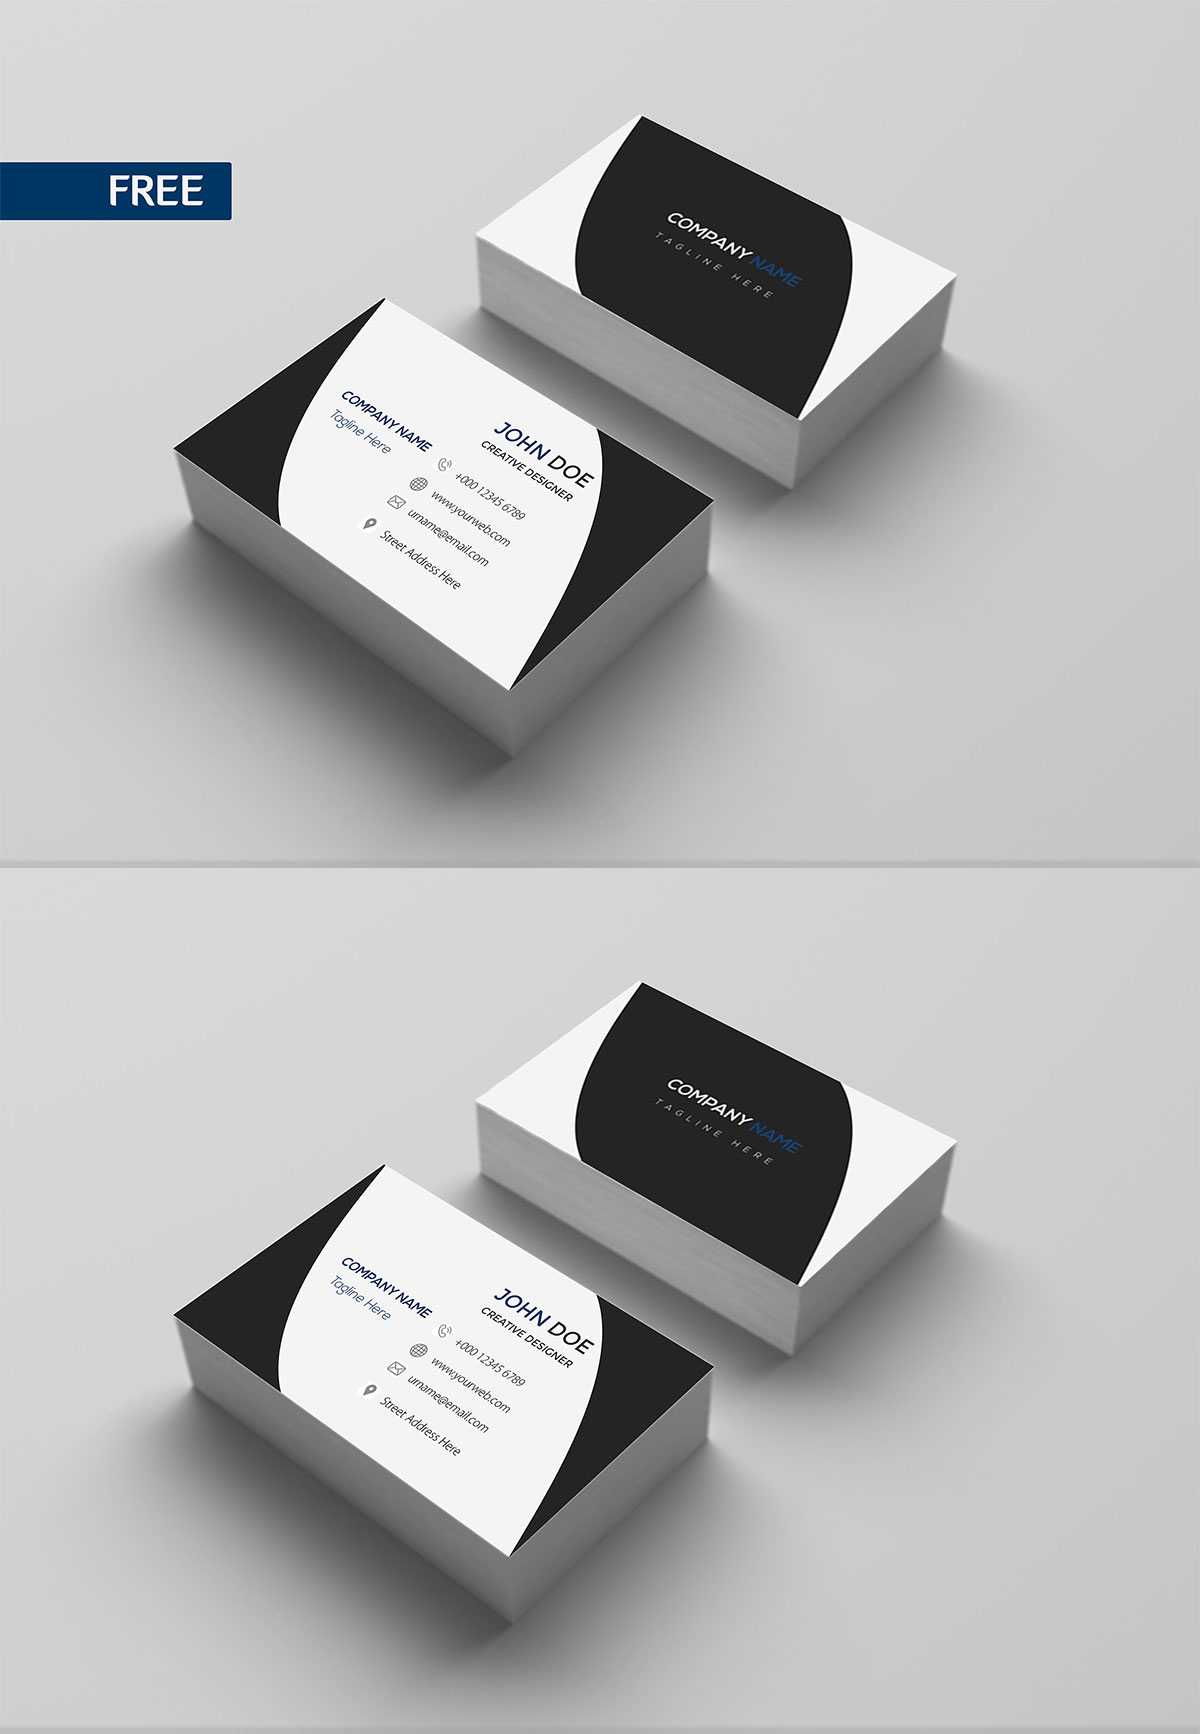 Free Print Design Business Card Template – Creativetacos Throughout Photoshop Cs6 Business Card Template